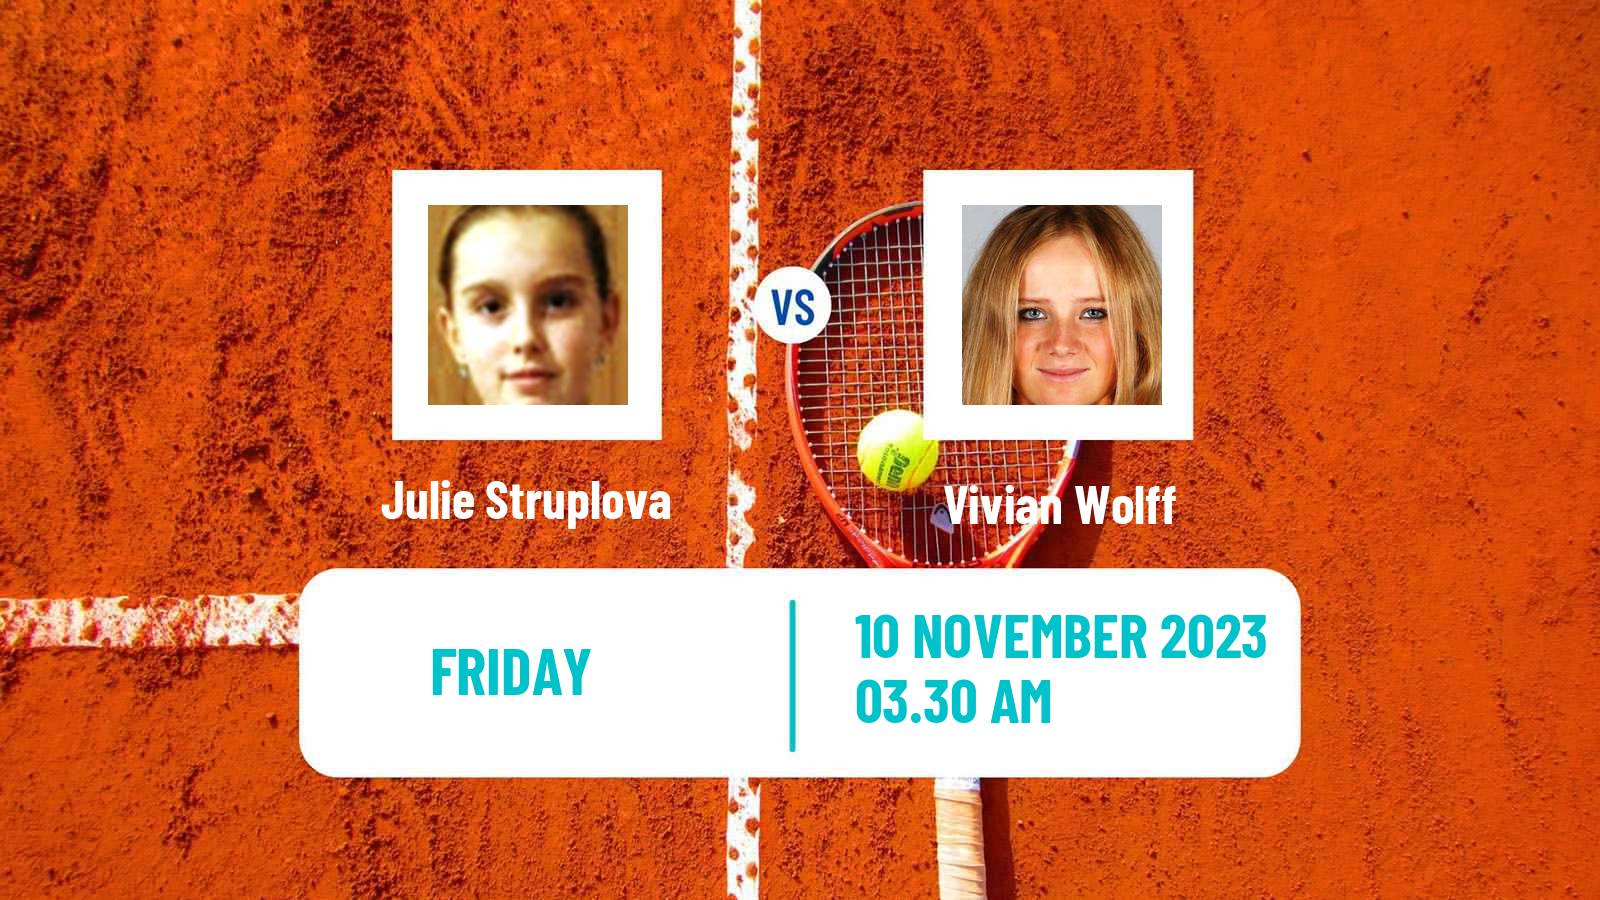 Tennis ITF W25 Solarino 2 Women Julie Struplova - Vivian Wolff